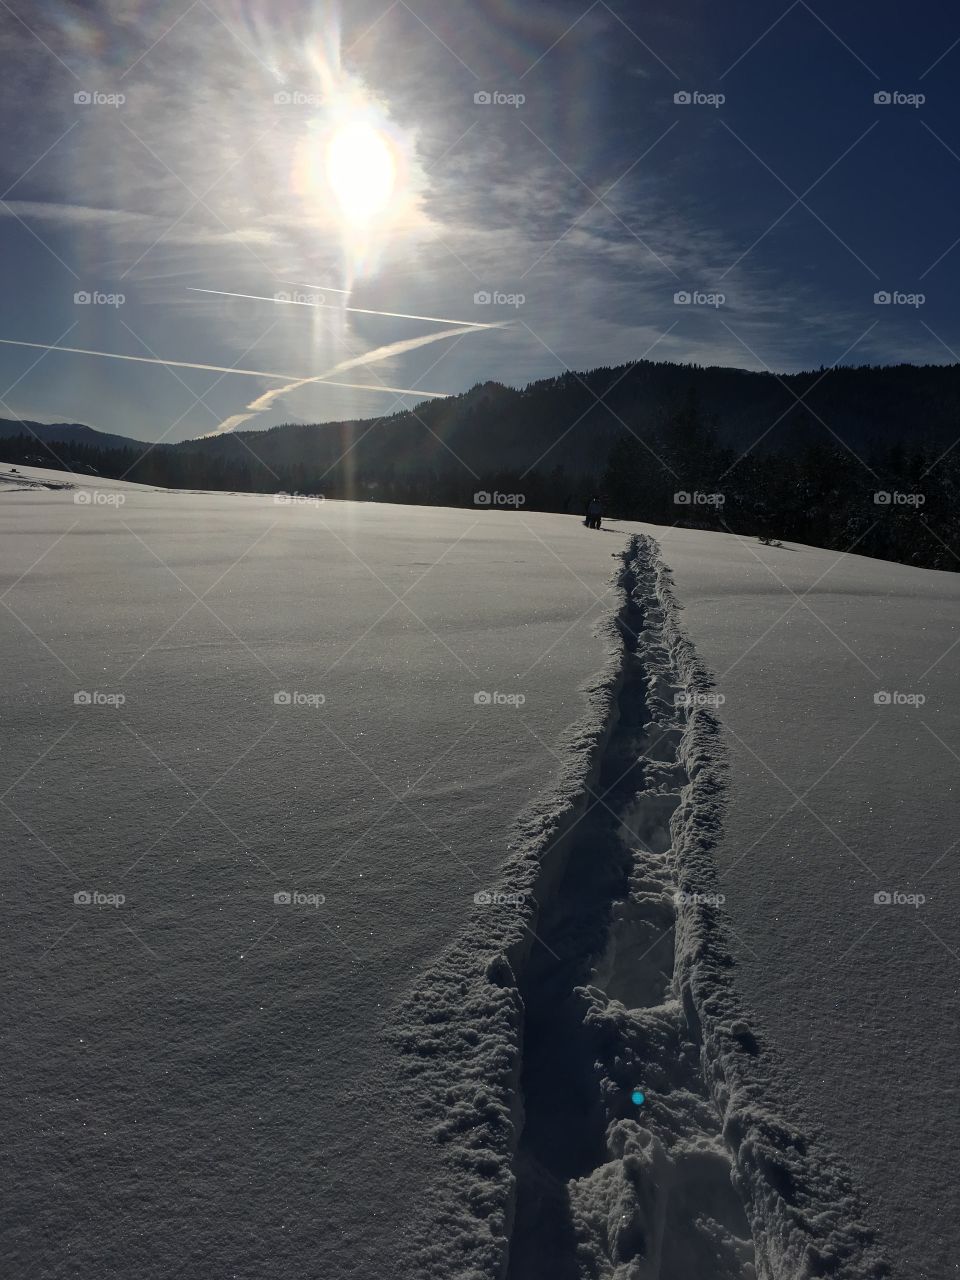 Snowshoeing in Idaho